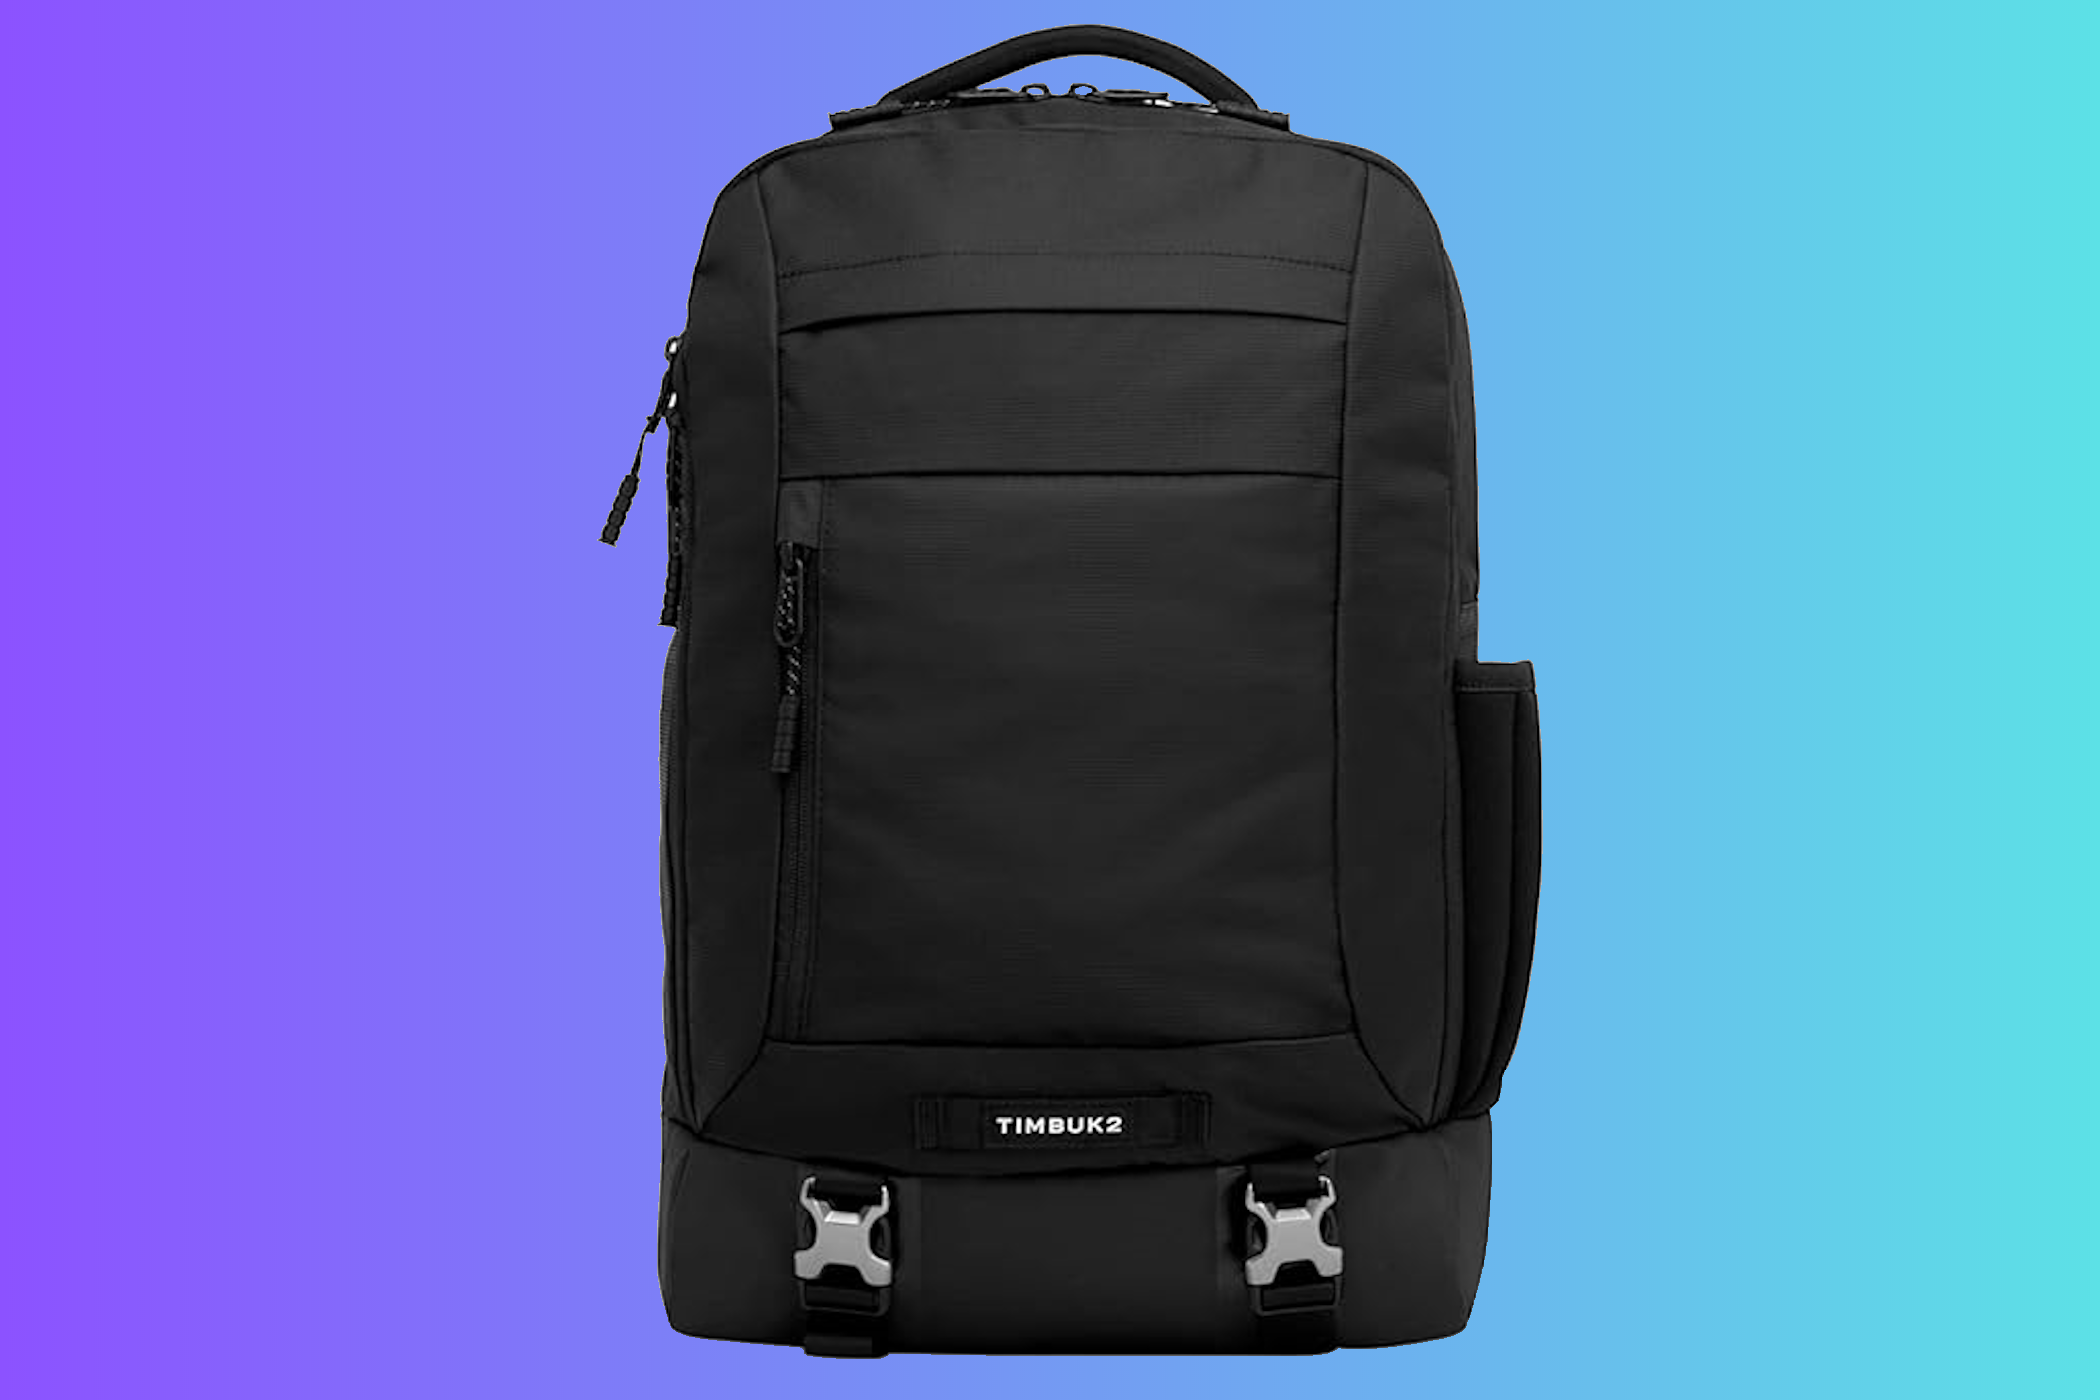 Timbuk2 Authority Laptop Backpack